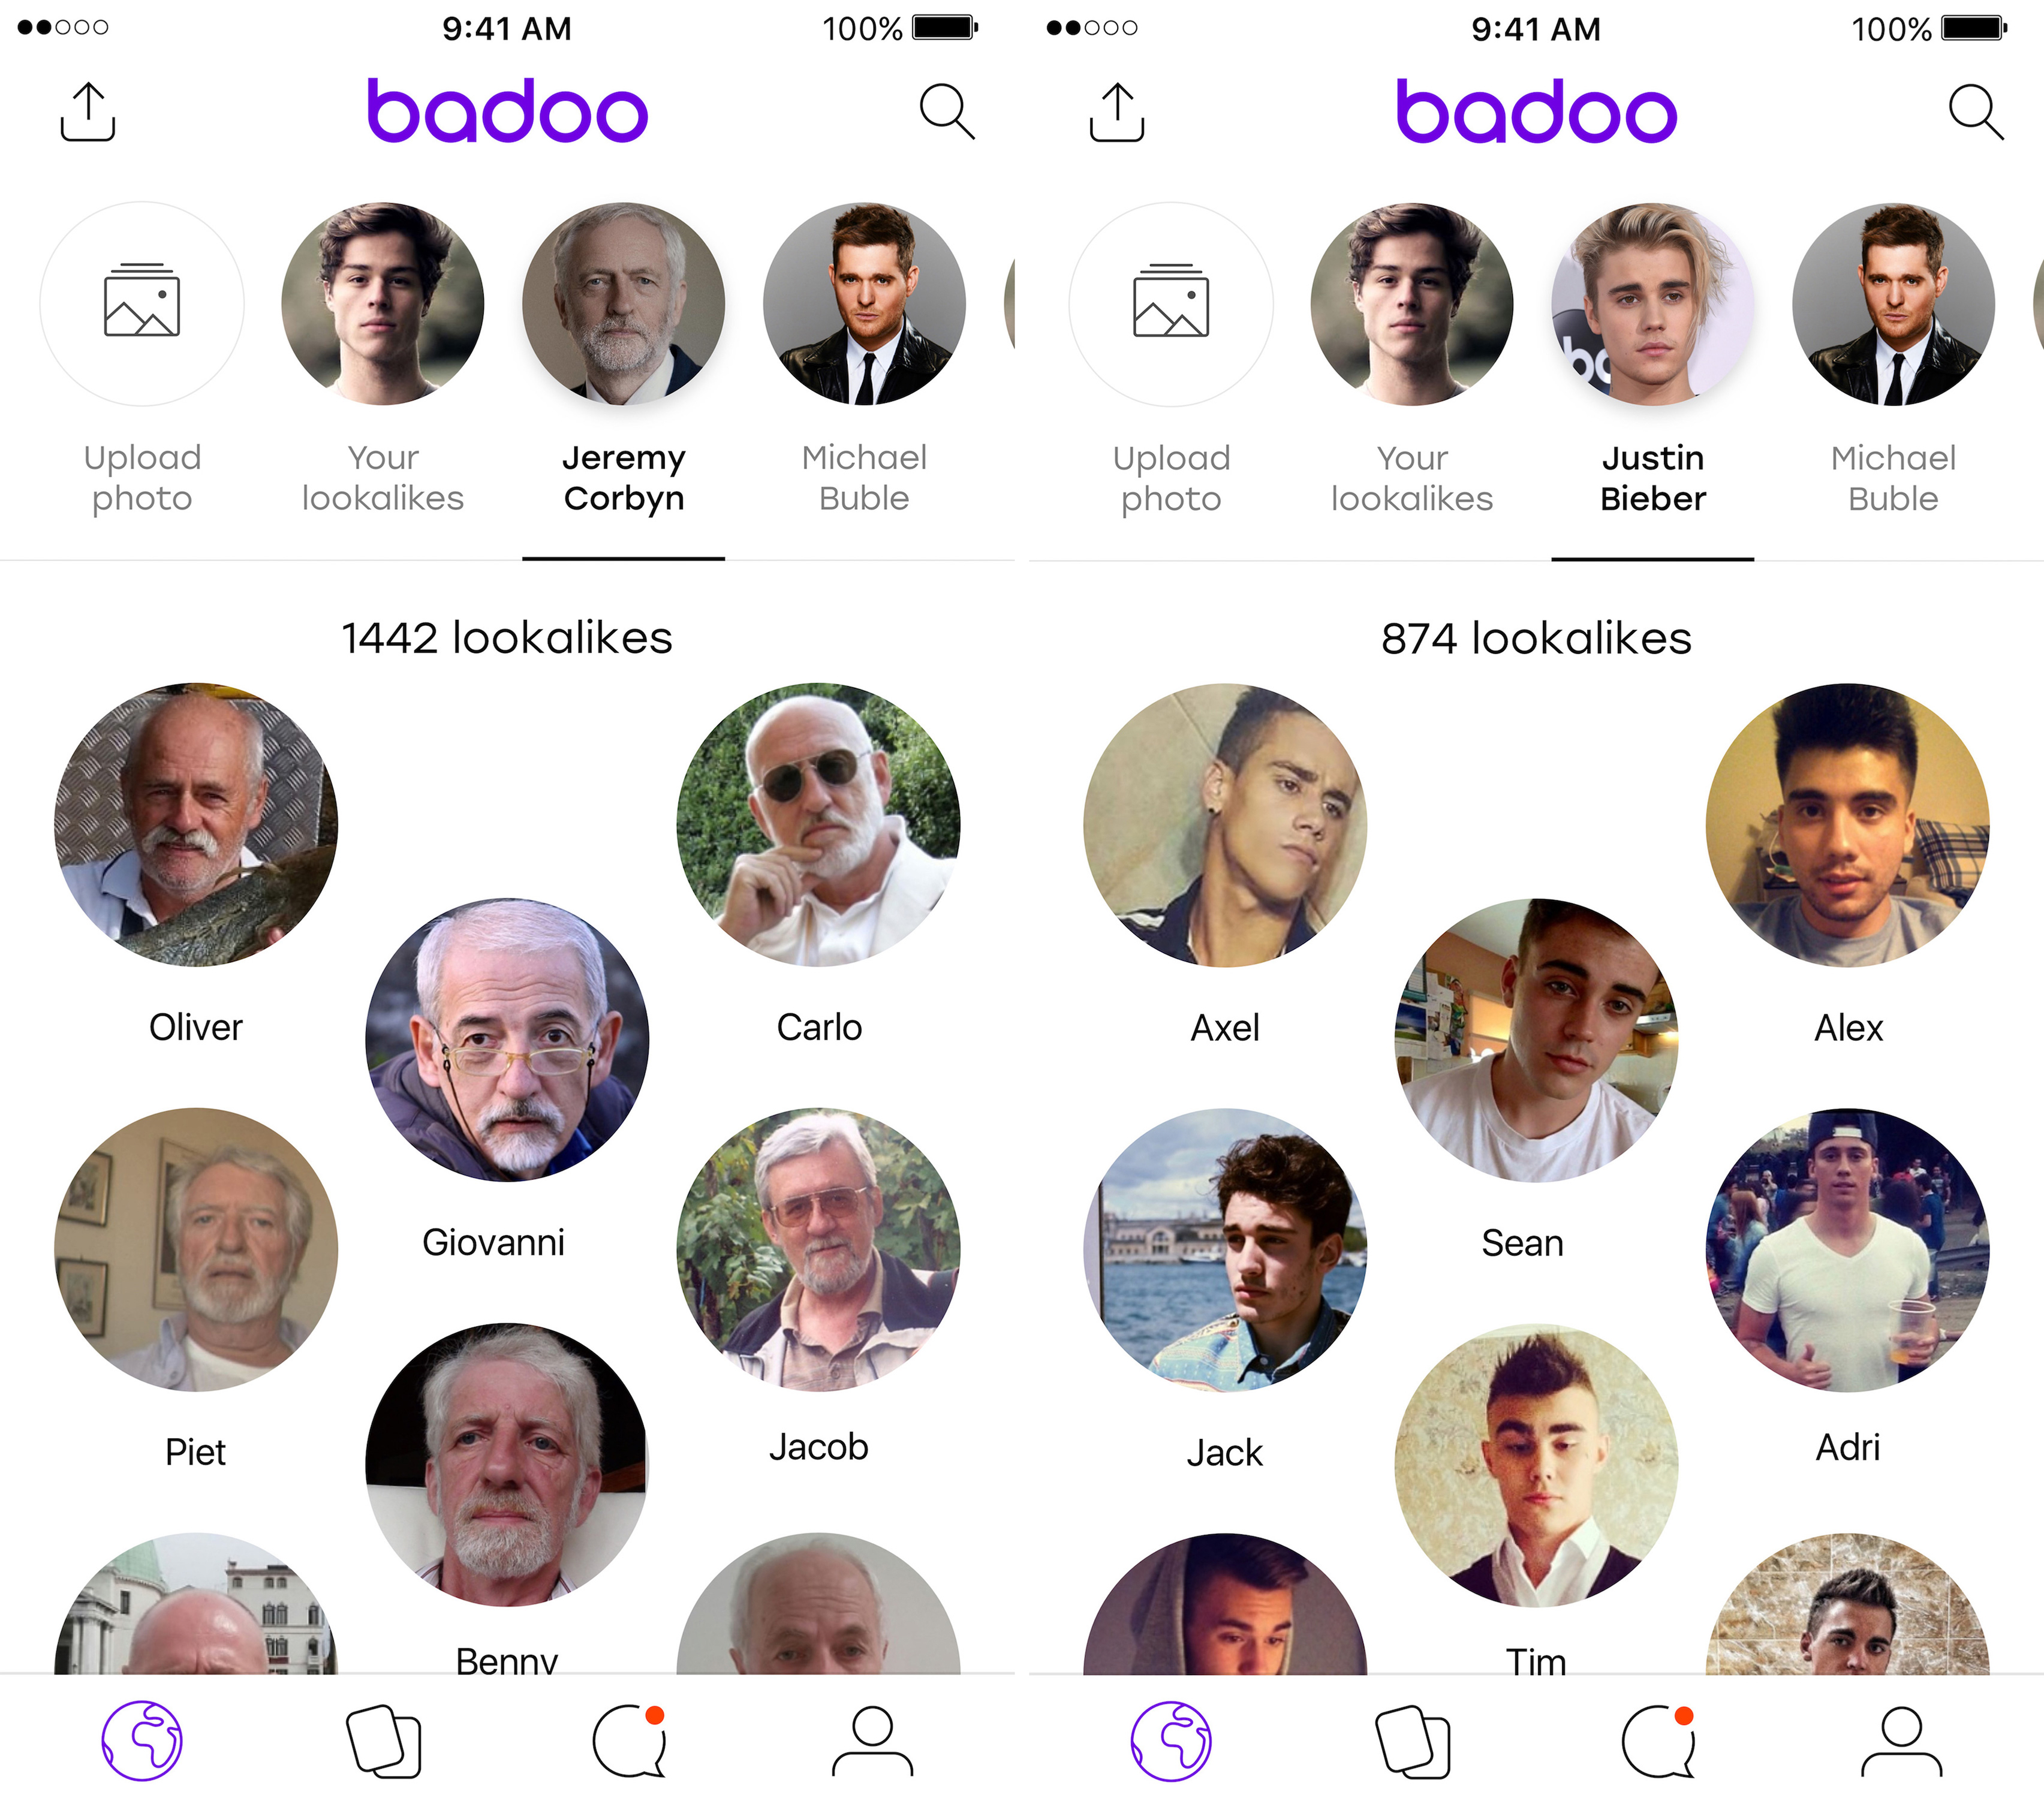 badoo dating network